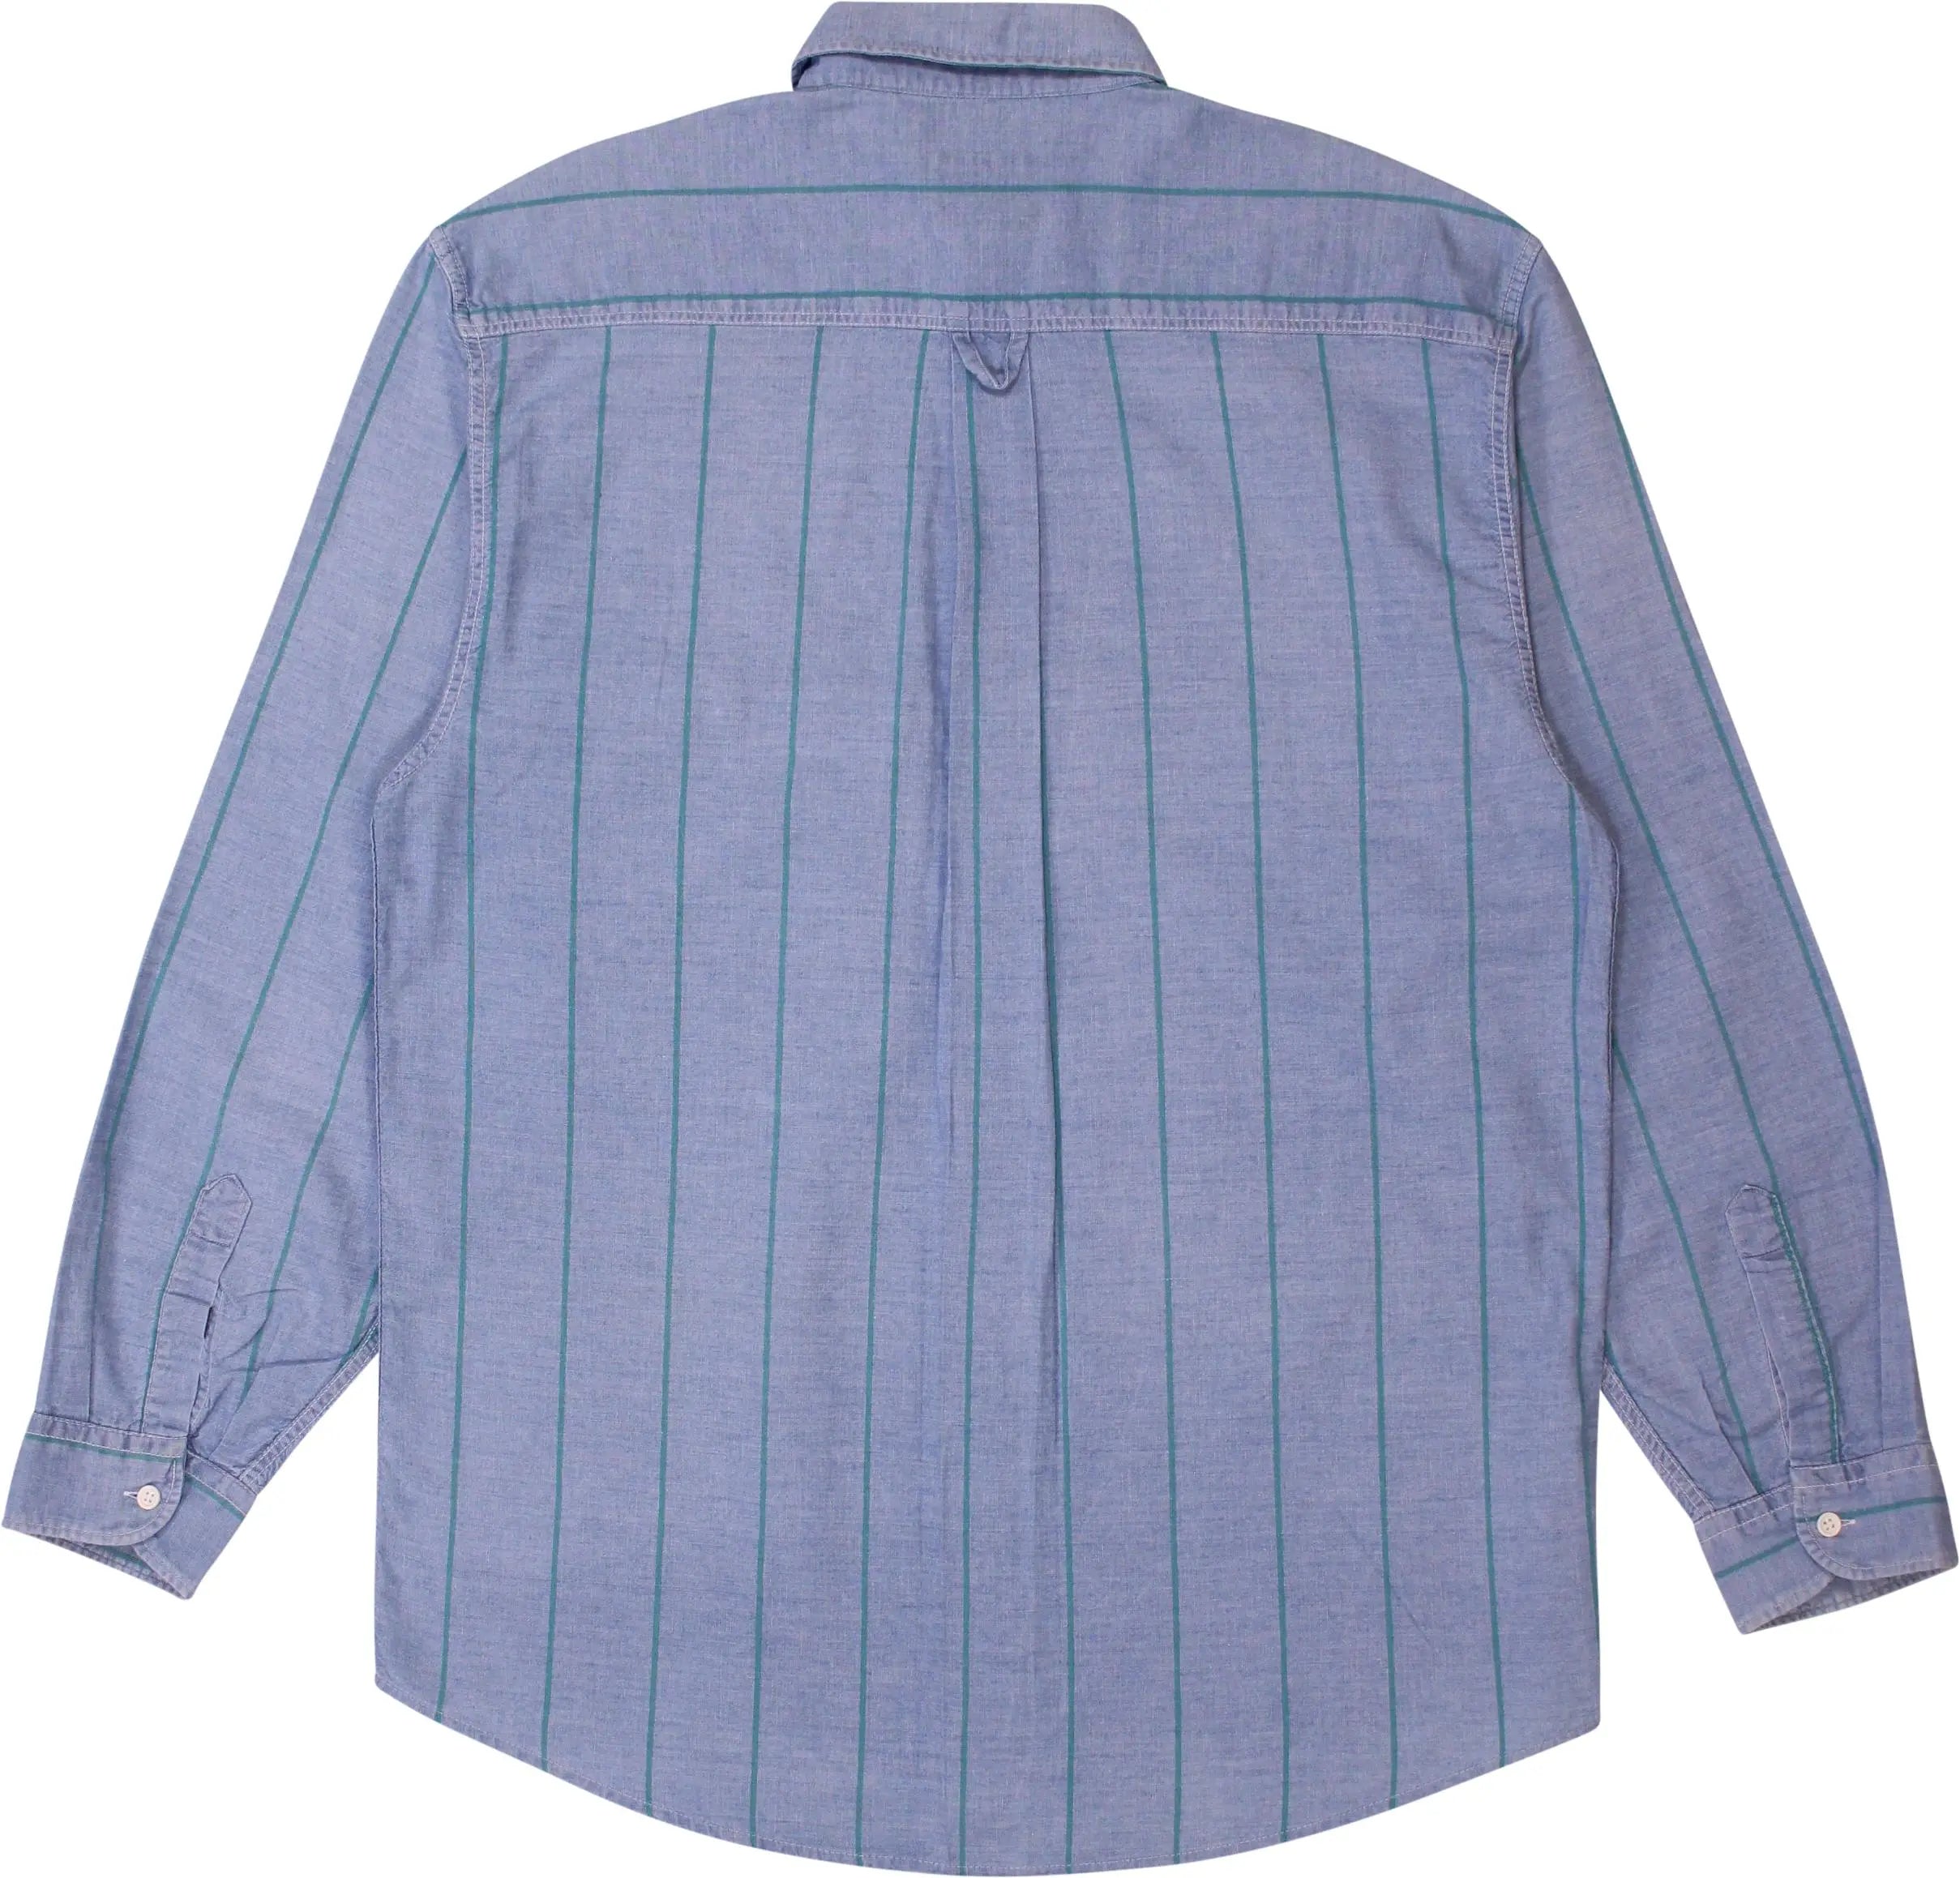 Levi's - Levi's Denim Shirt with Stripe Details- ThriftTale.com - Vintage and second handclothing